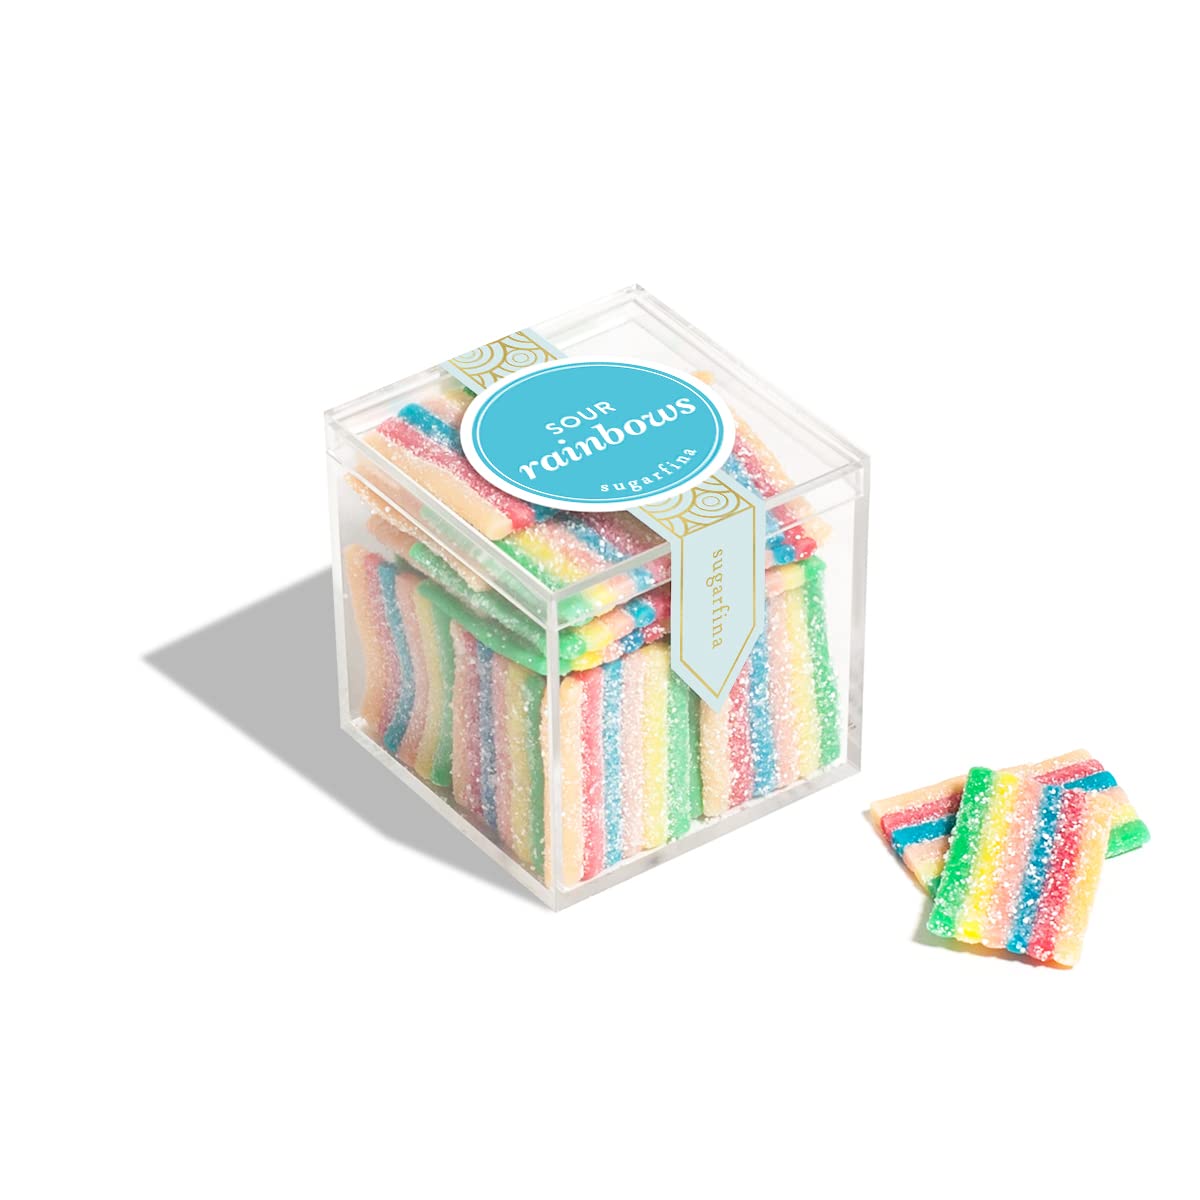 Sugarfina Sour Rainbows Small Candy Cube, Gummies, 3.2oz, 1 Count